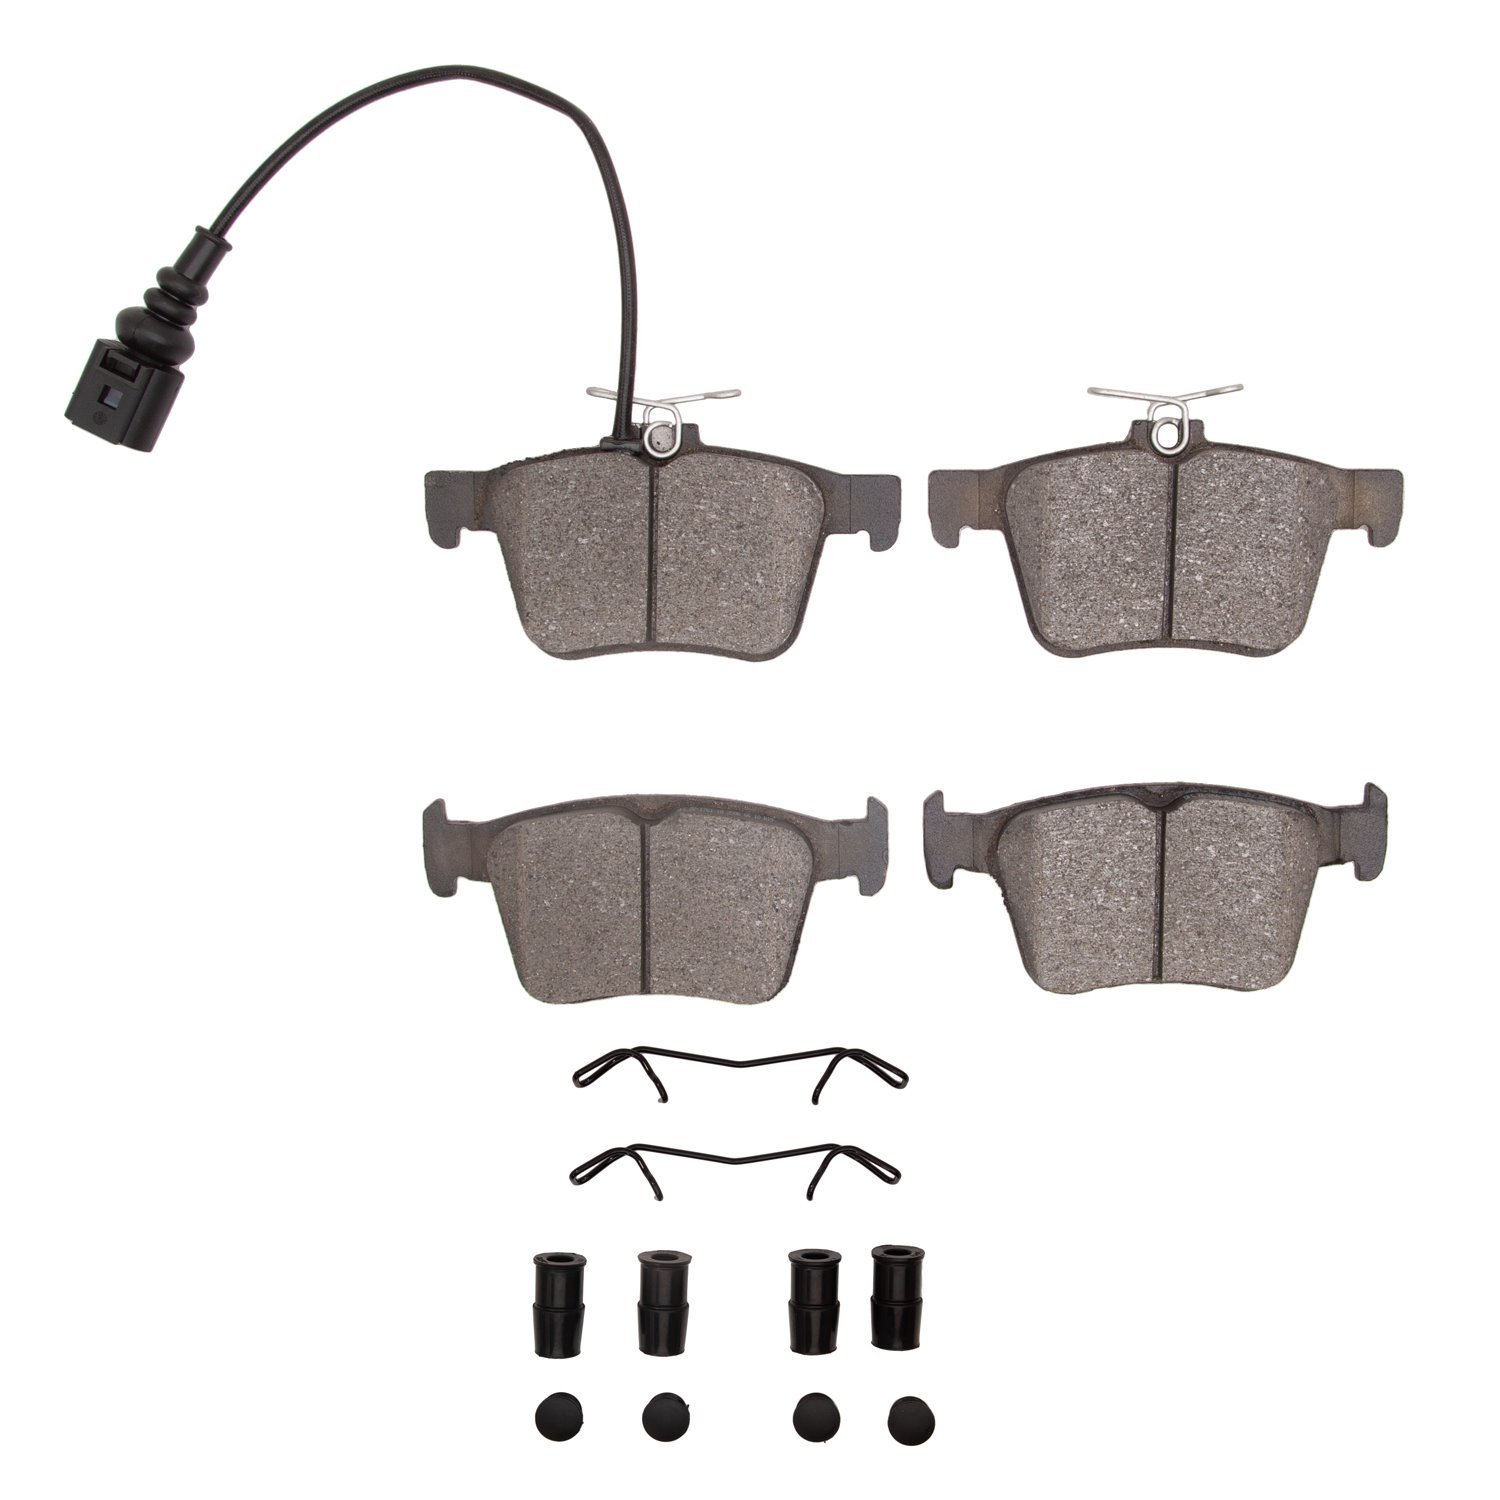 Semi-Metallic Brake Pads & Hardware Kit, Fits Select Audi/Porsche/Volkswagen, Position: Rear